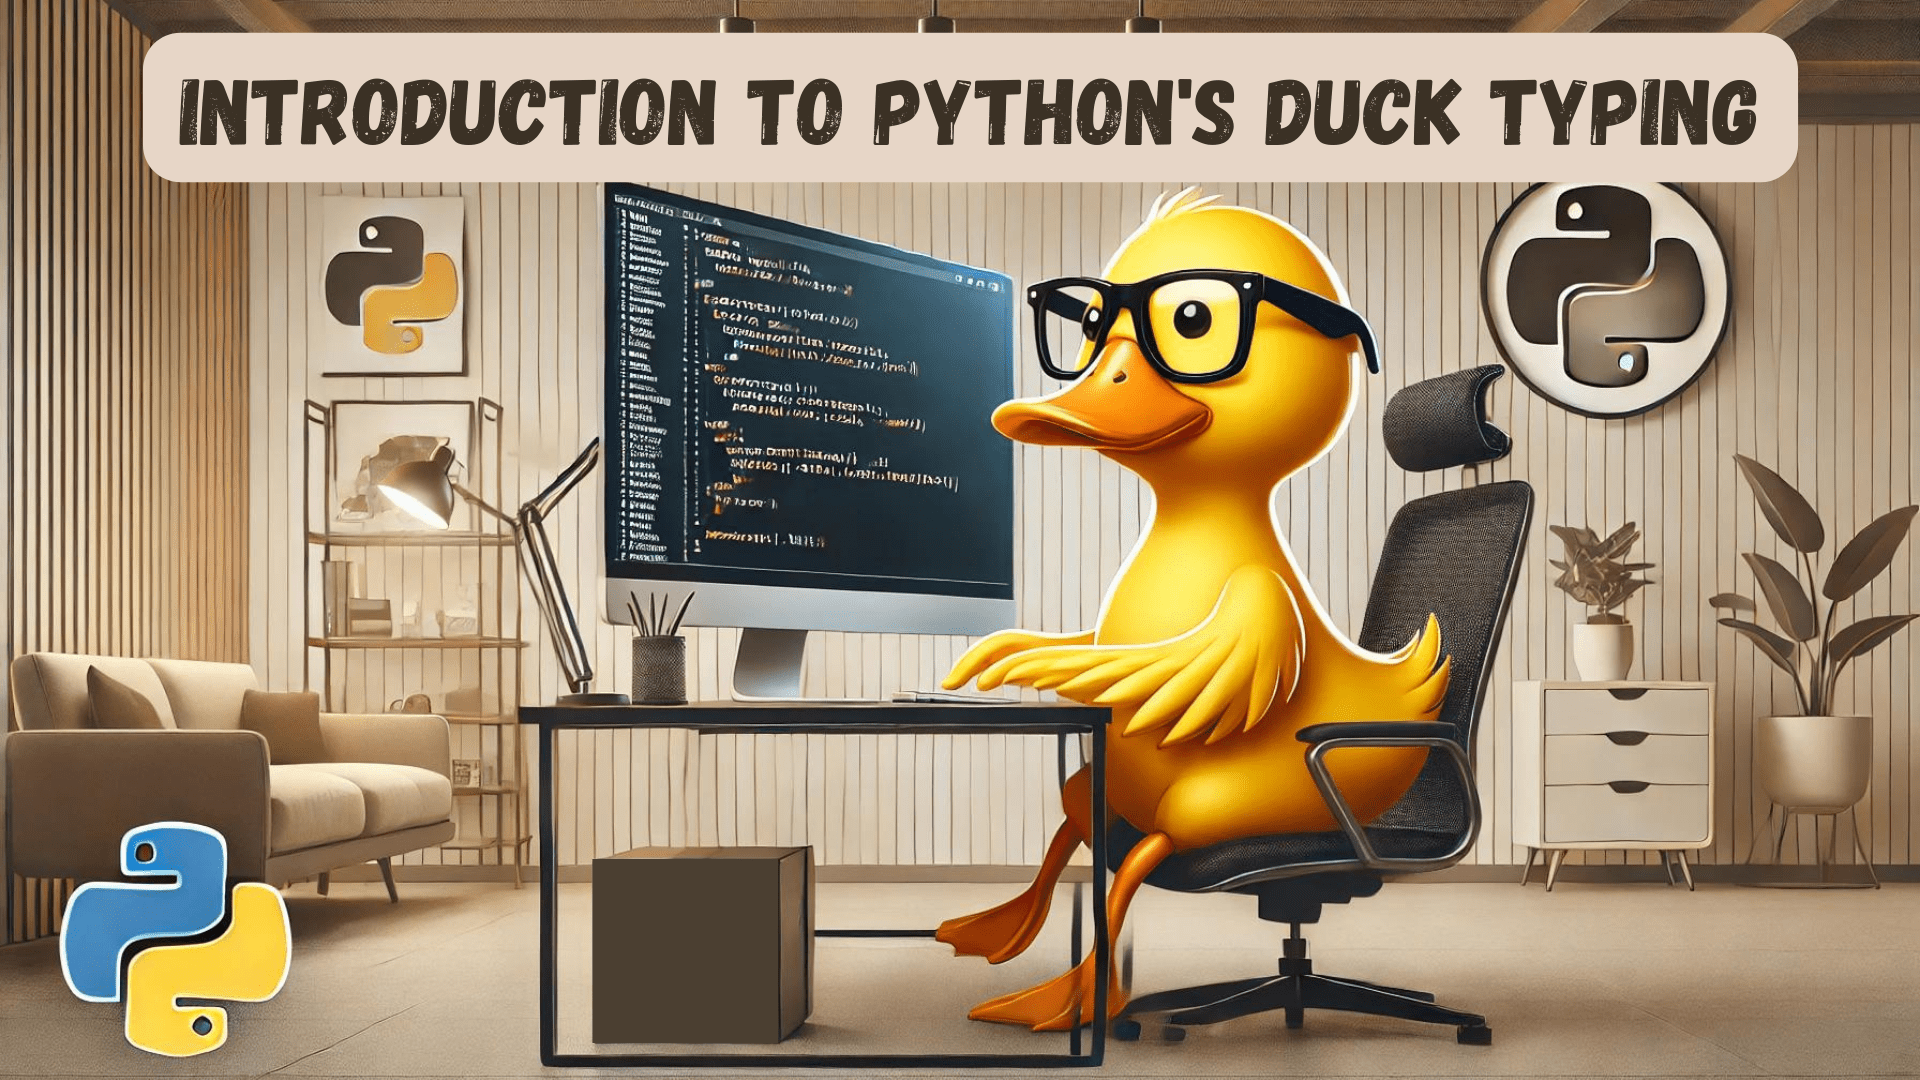 Python's Duck Typing